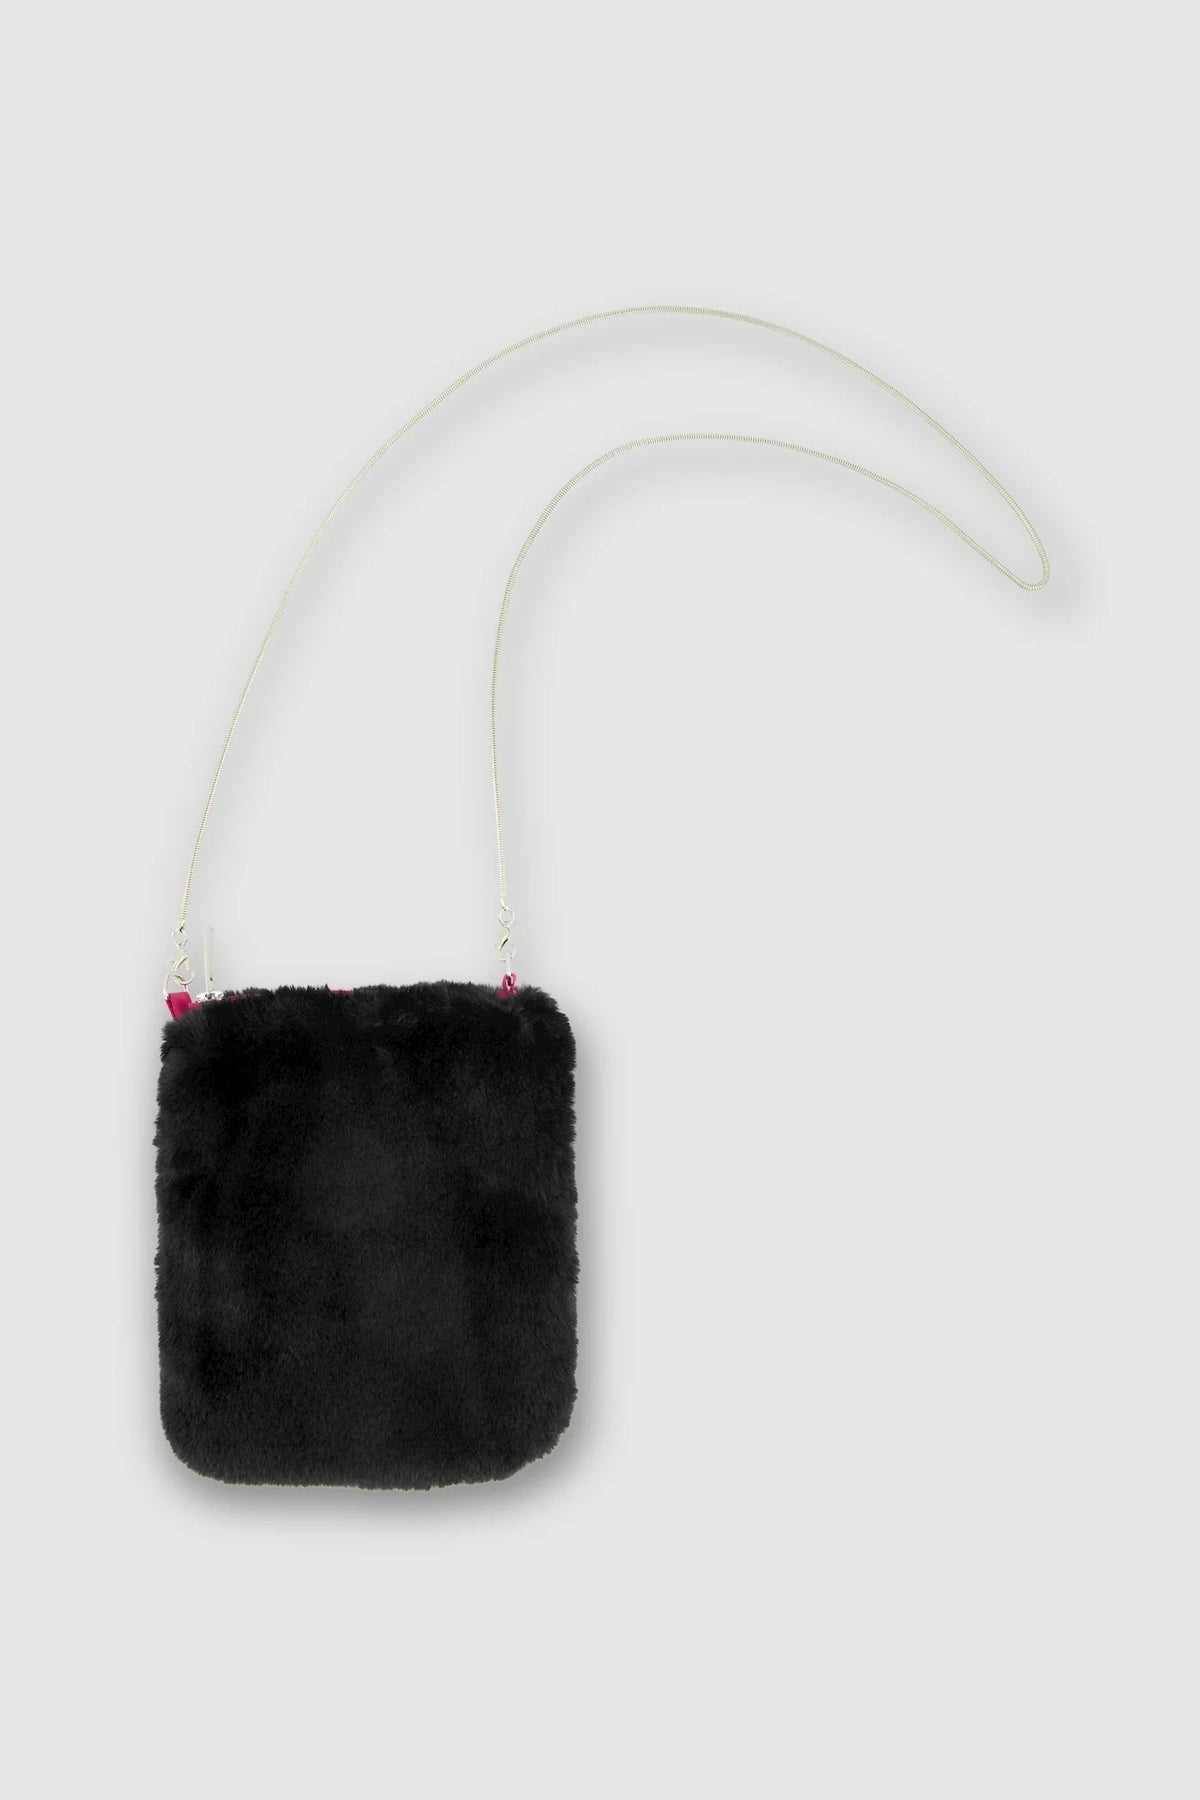 Small black faux fur shoulder bag with silver metallic cord detachable strap